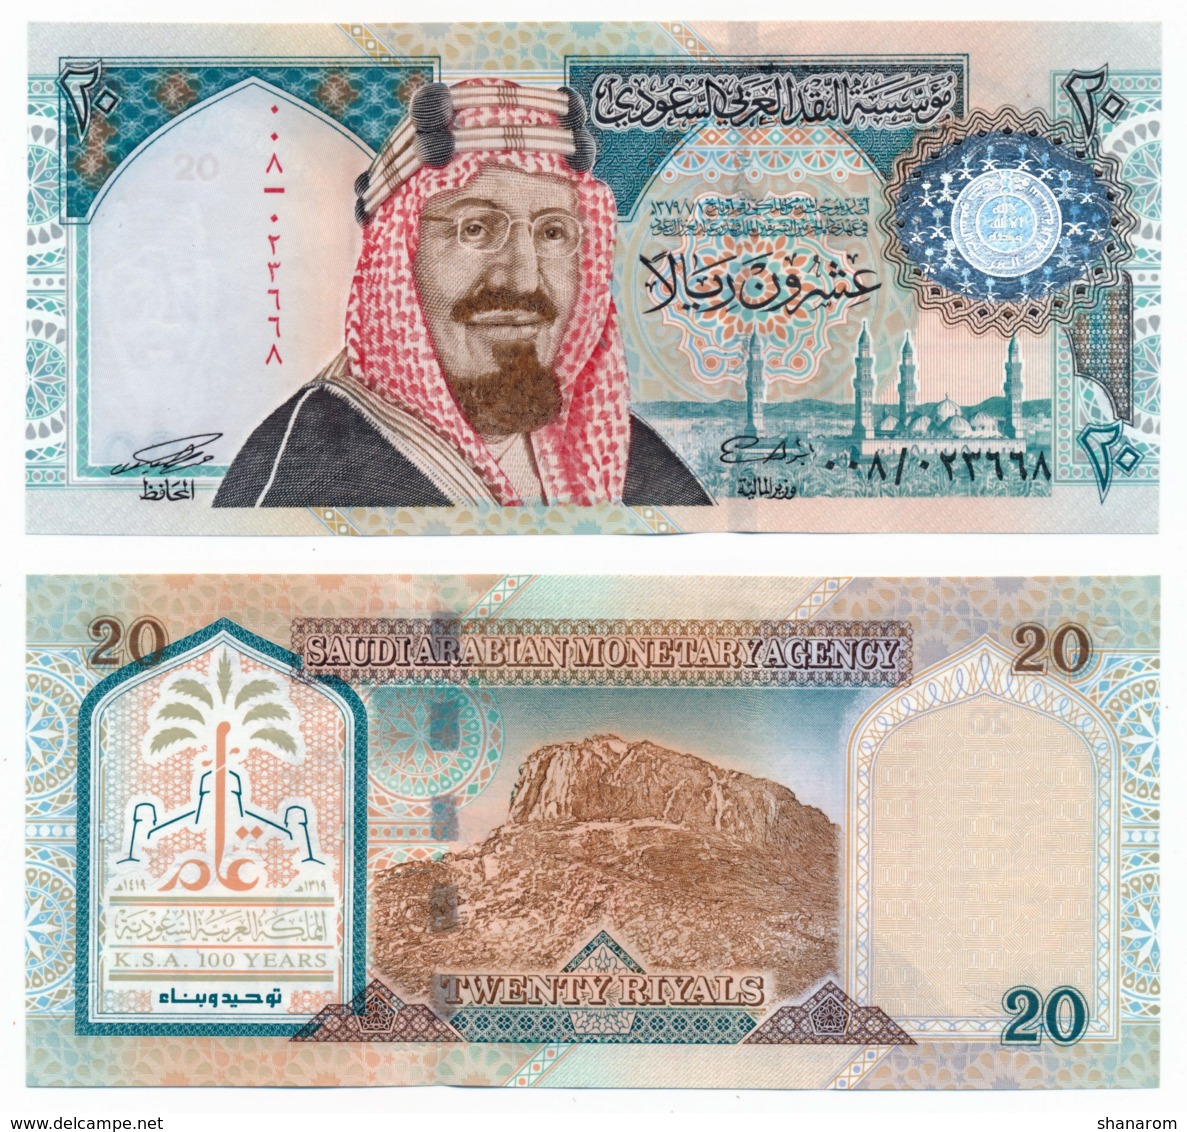 SAUDI ARABIAN MONETARY AGENCY // 20 Riyals // AU - Saudi Arabia